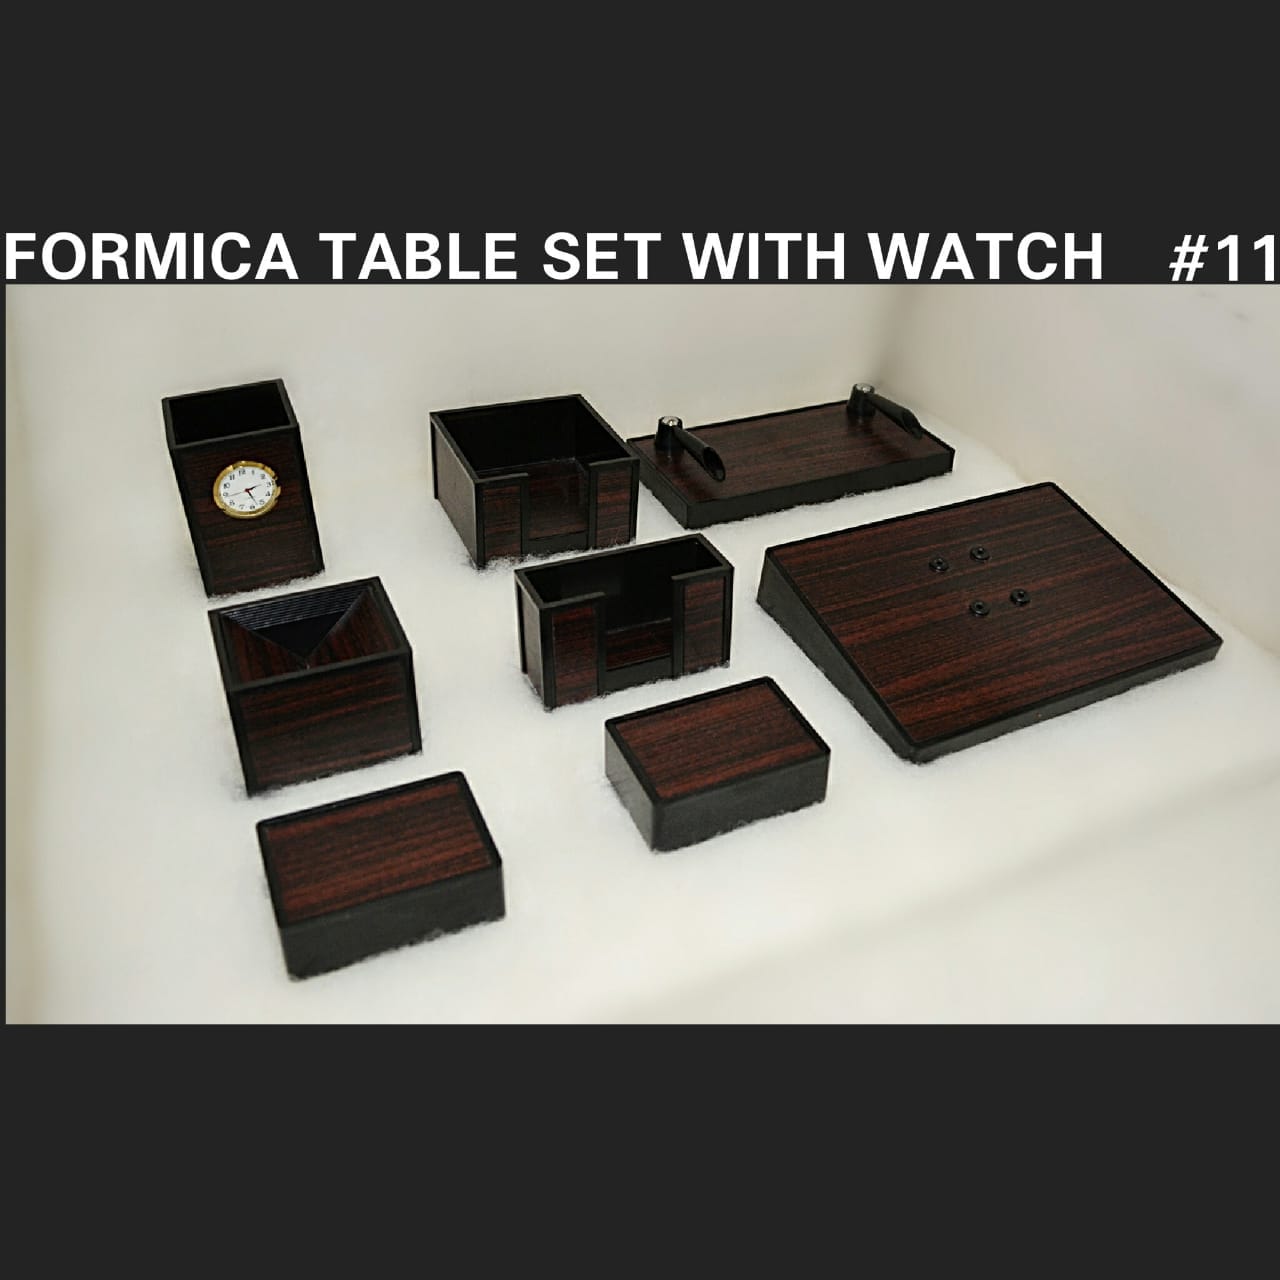 Senator Office Table Desk Organizer 8pcs Set With Watch #11